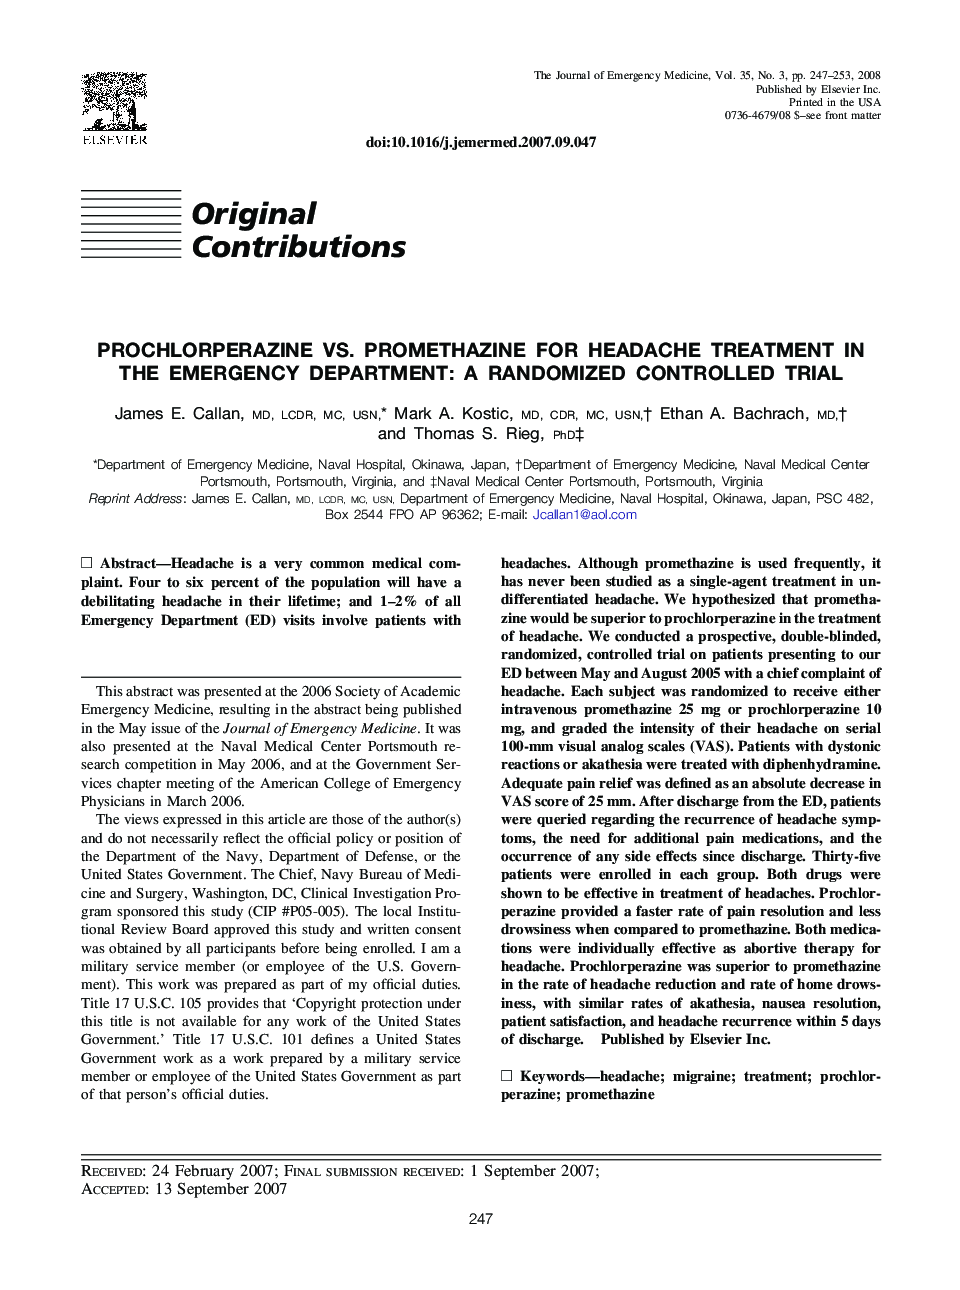 Prochlorperazine vs. Promethazine for Headache Treatment in the Emergency Department: A Randomized Controlled Trial 